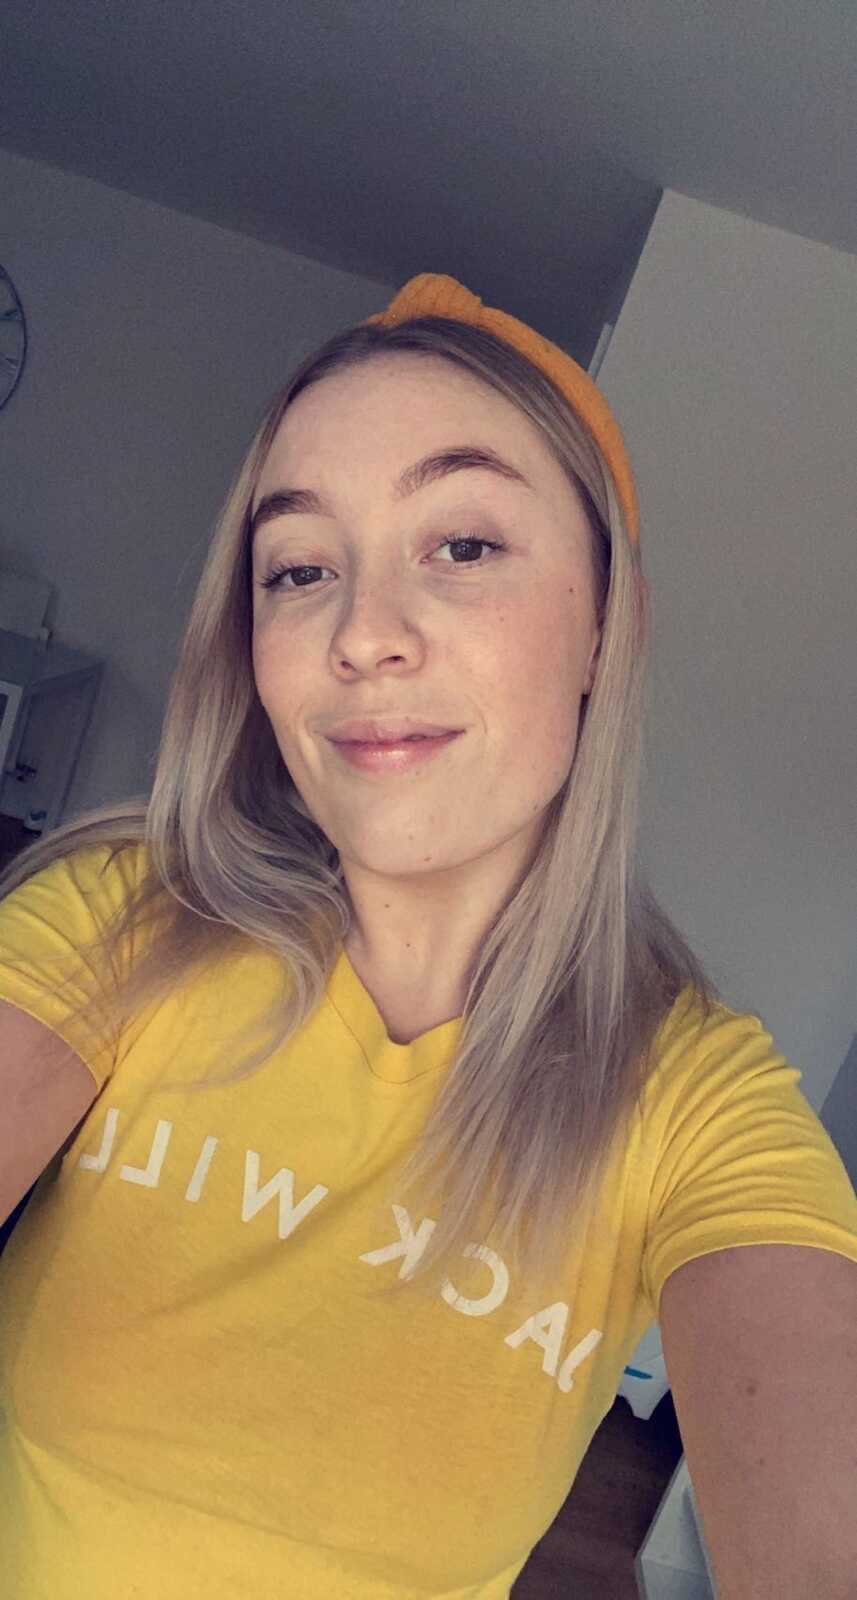 endometriosis warrior taking a selfie while wearing a headband